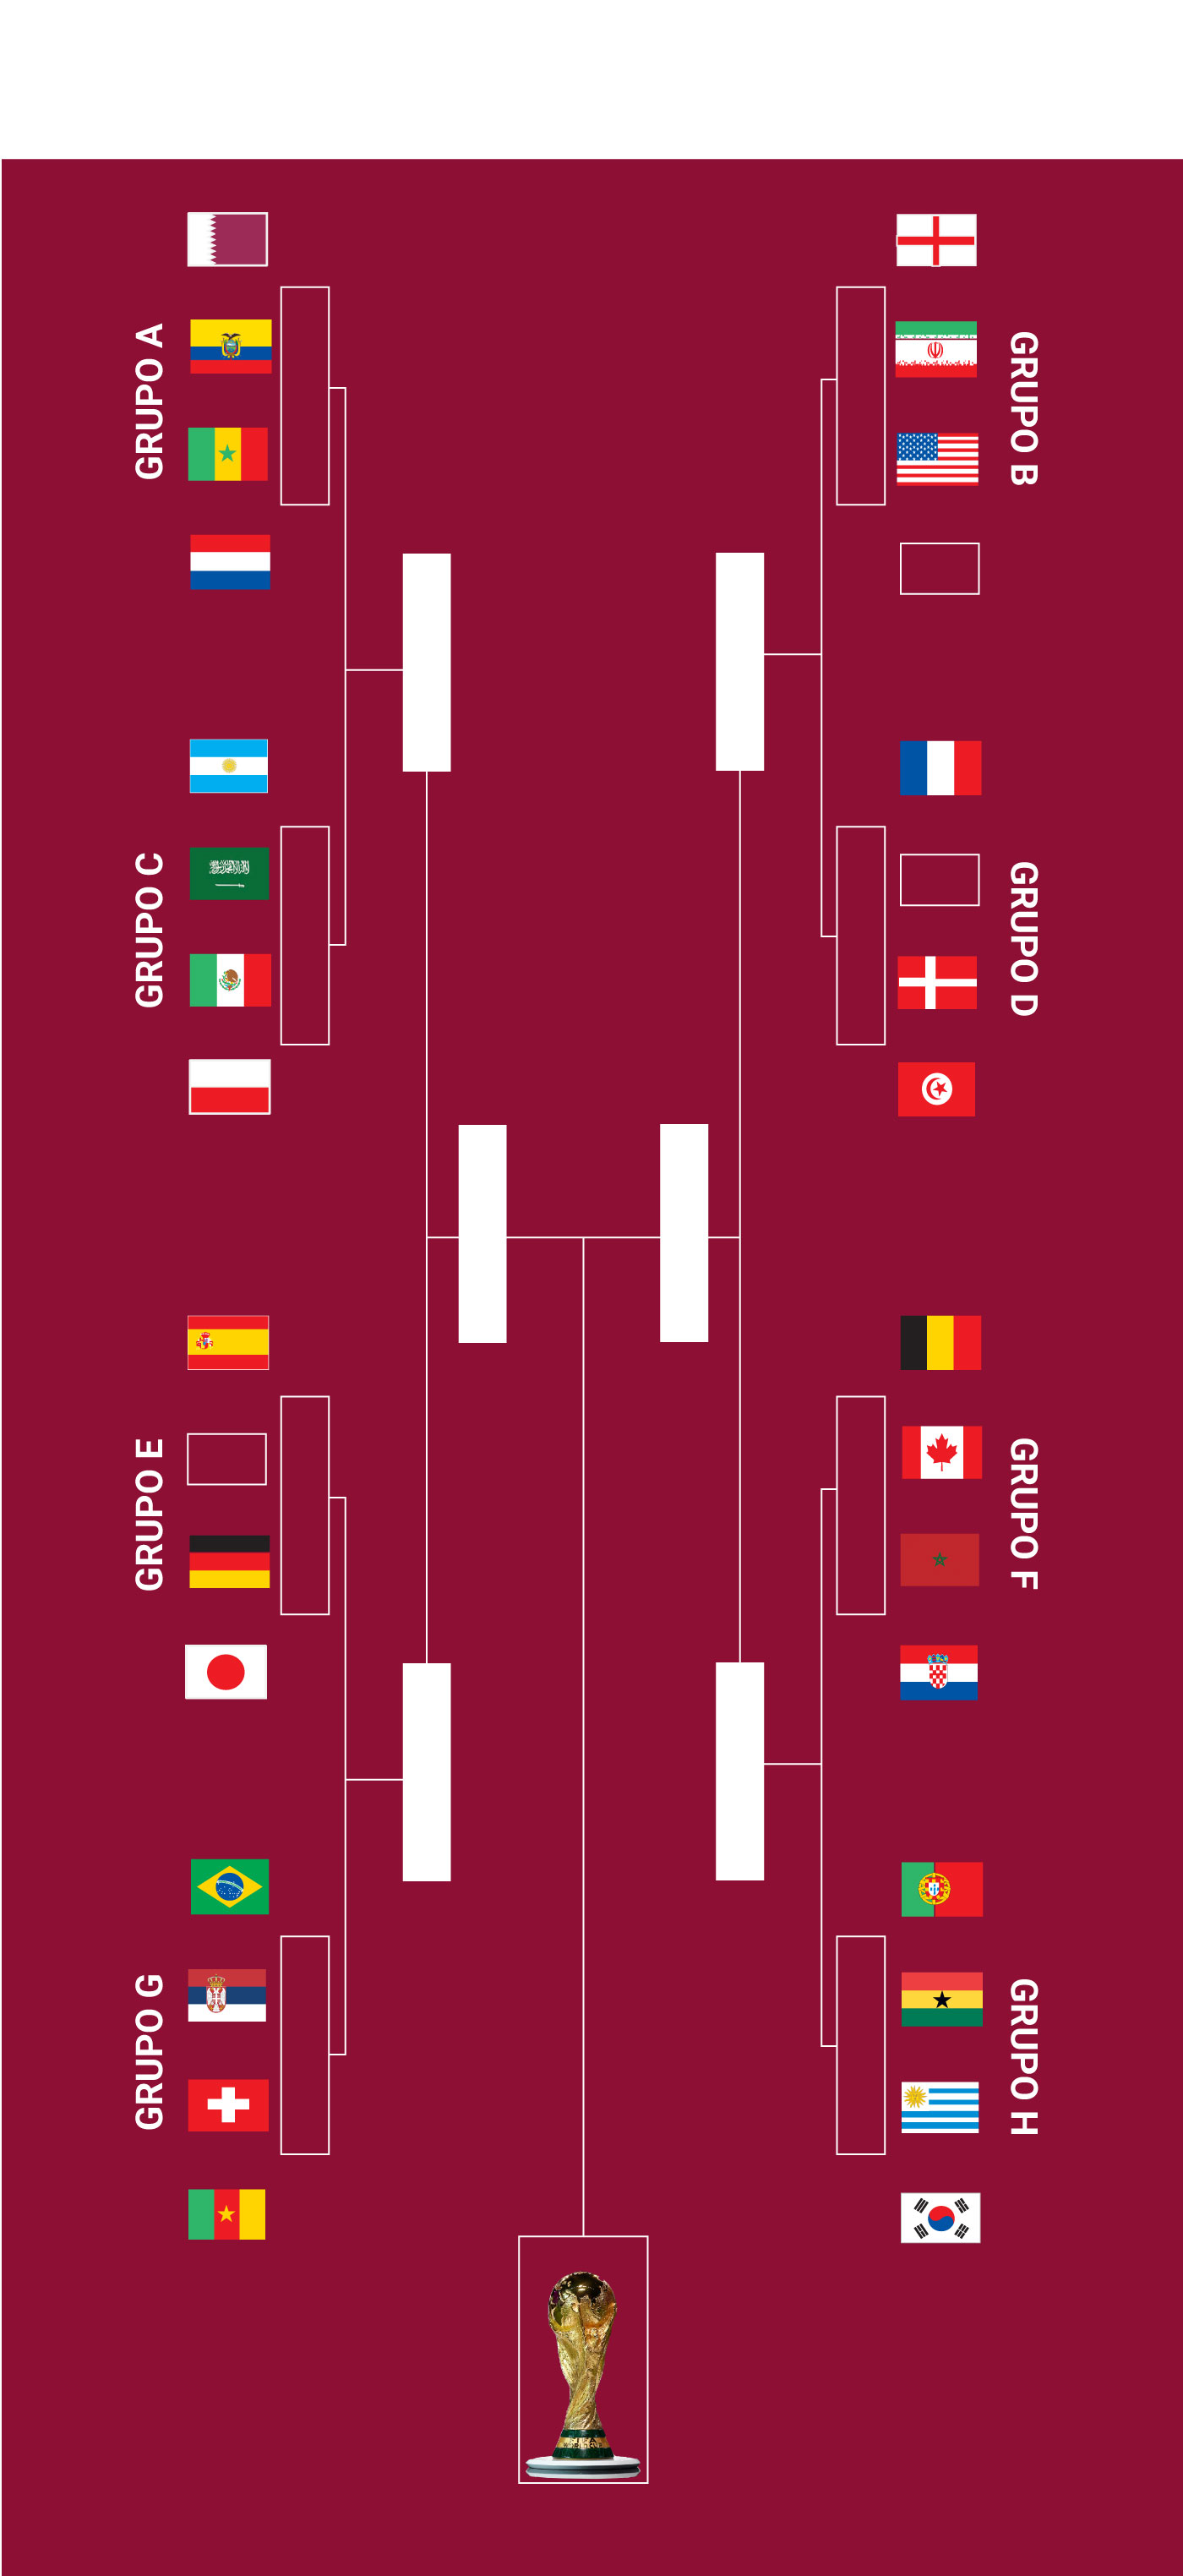 Veja como foi o sorteio da Copa do Mundo; confira os jogos da primeira fase